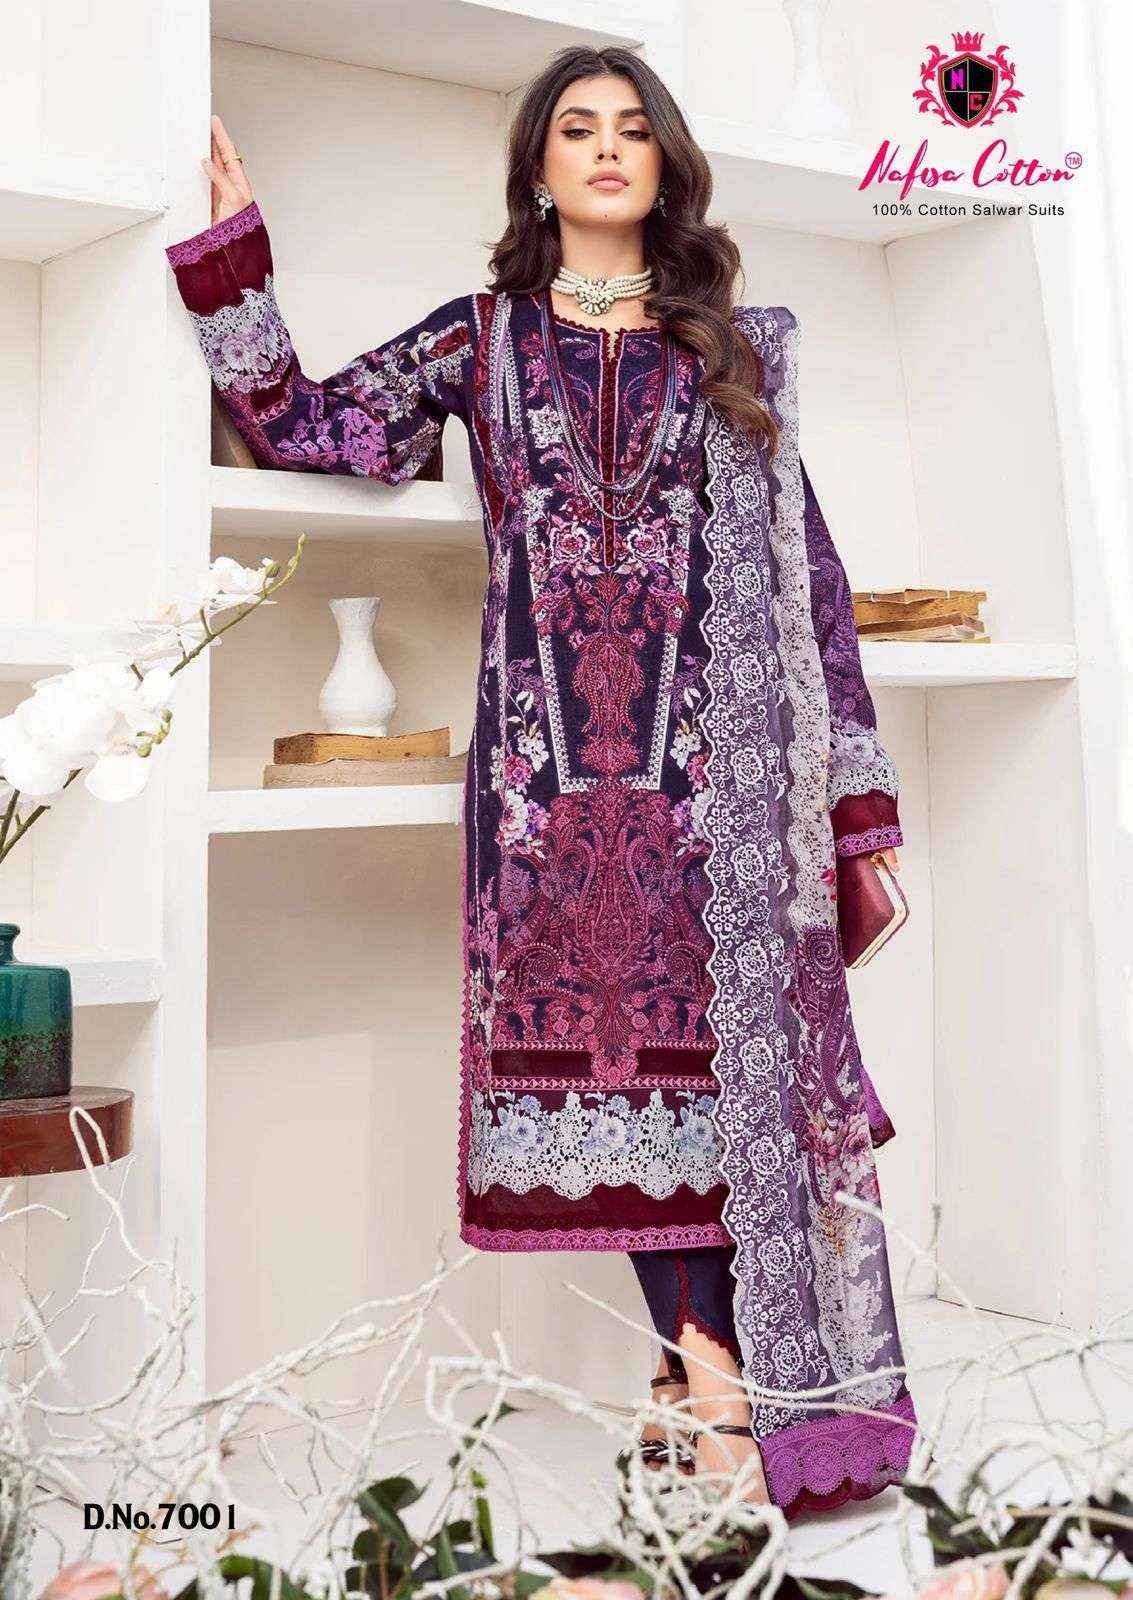 Nafisa Cotton Safina Vol 7 Cotton Dress Material 6 pcs Catalogue